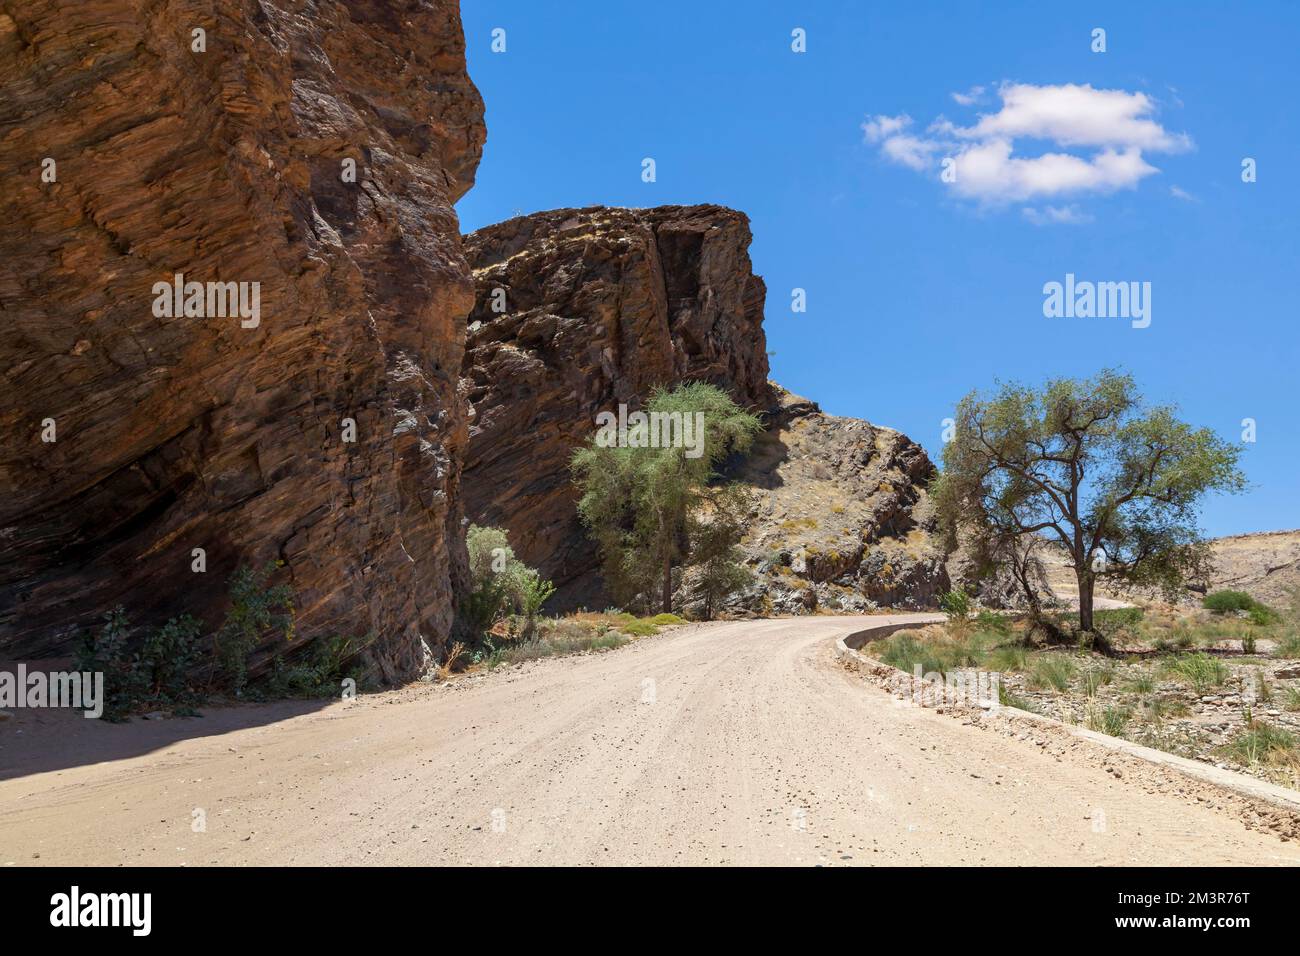 Road C14 and landscape at Kuiseb Pass, Namibia Stock Photo